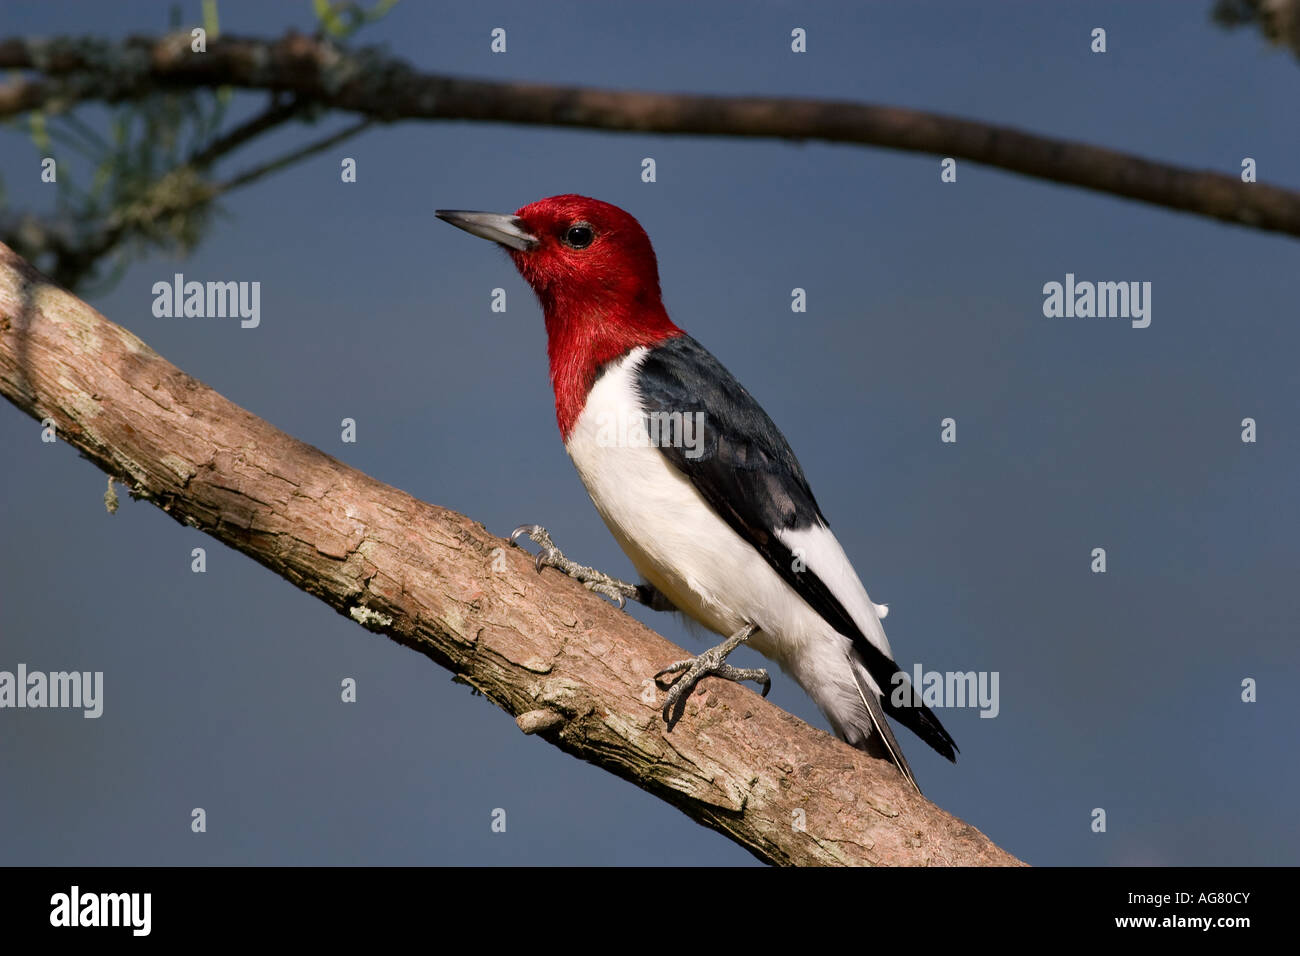 Pájaro carpintero de cabeza roja, Melanerpes erythrocephalus, alimentándose de sebo, Carolina del Norte, EE.UU. Foto de stock